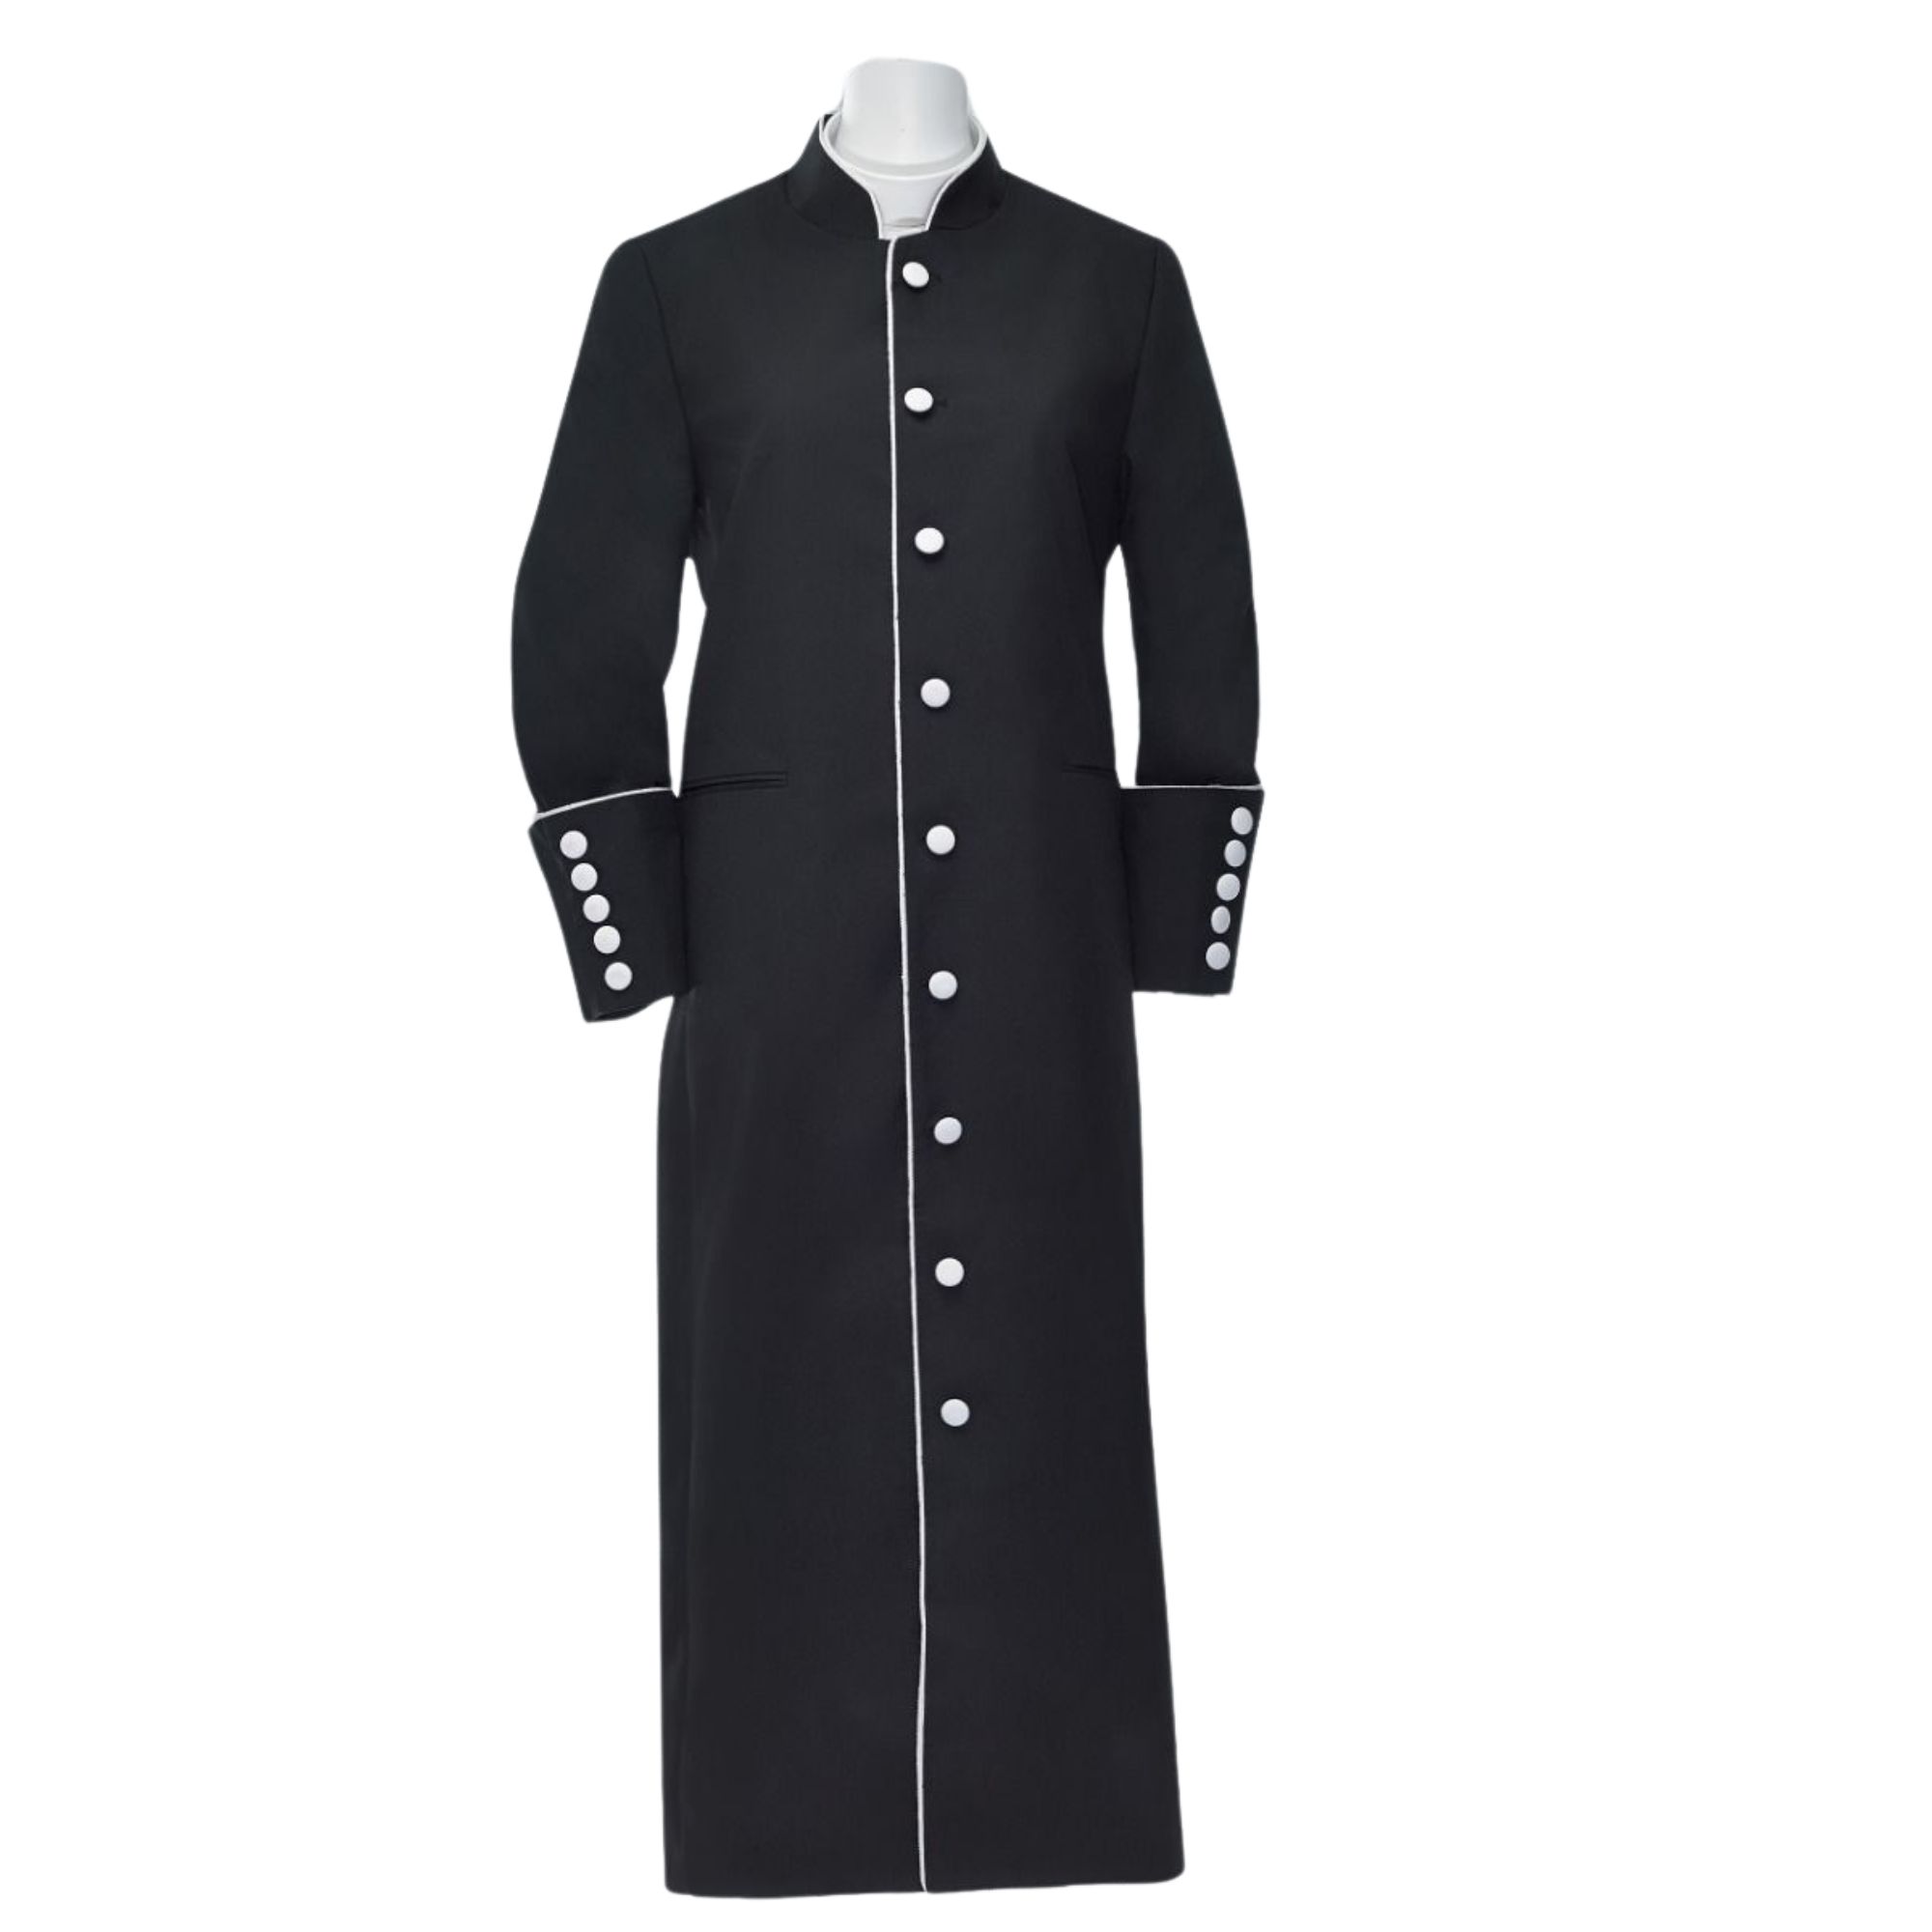 Men's Clergy Robe - Black and White Trim